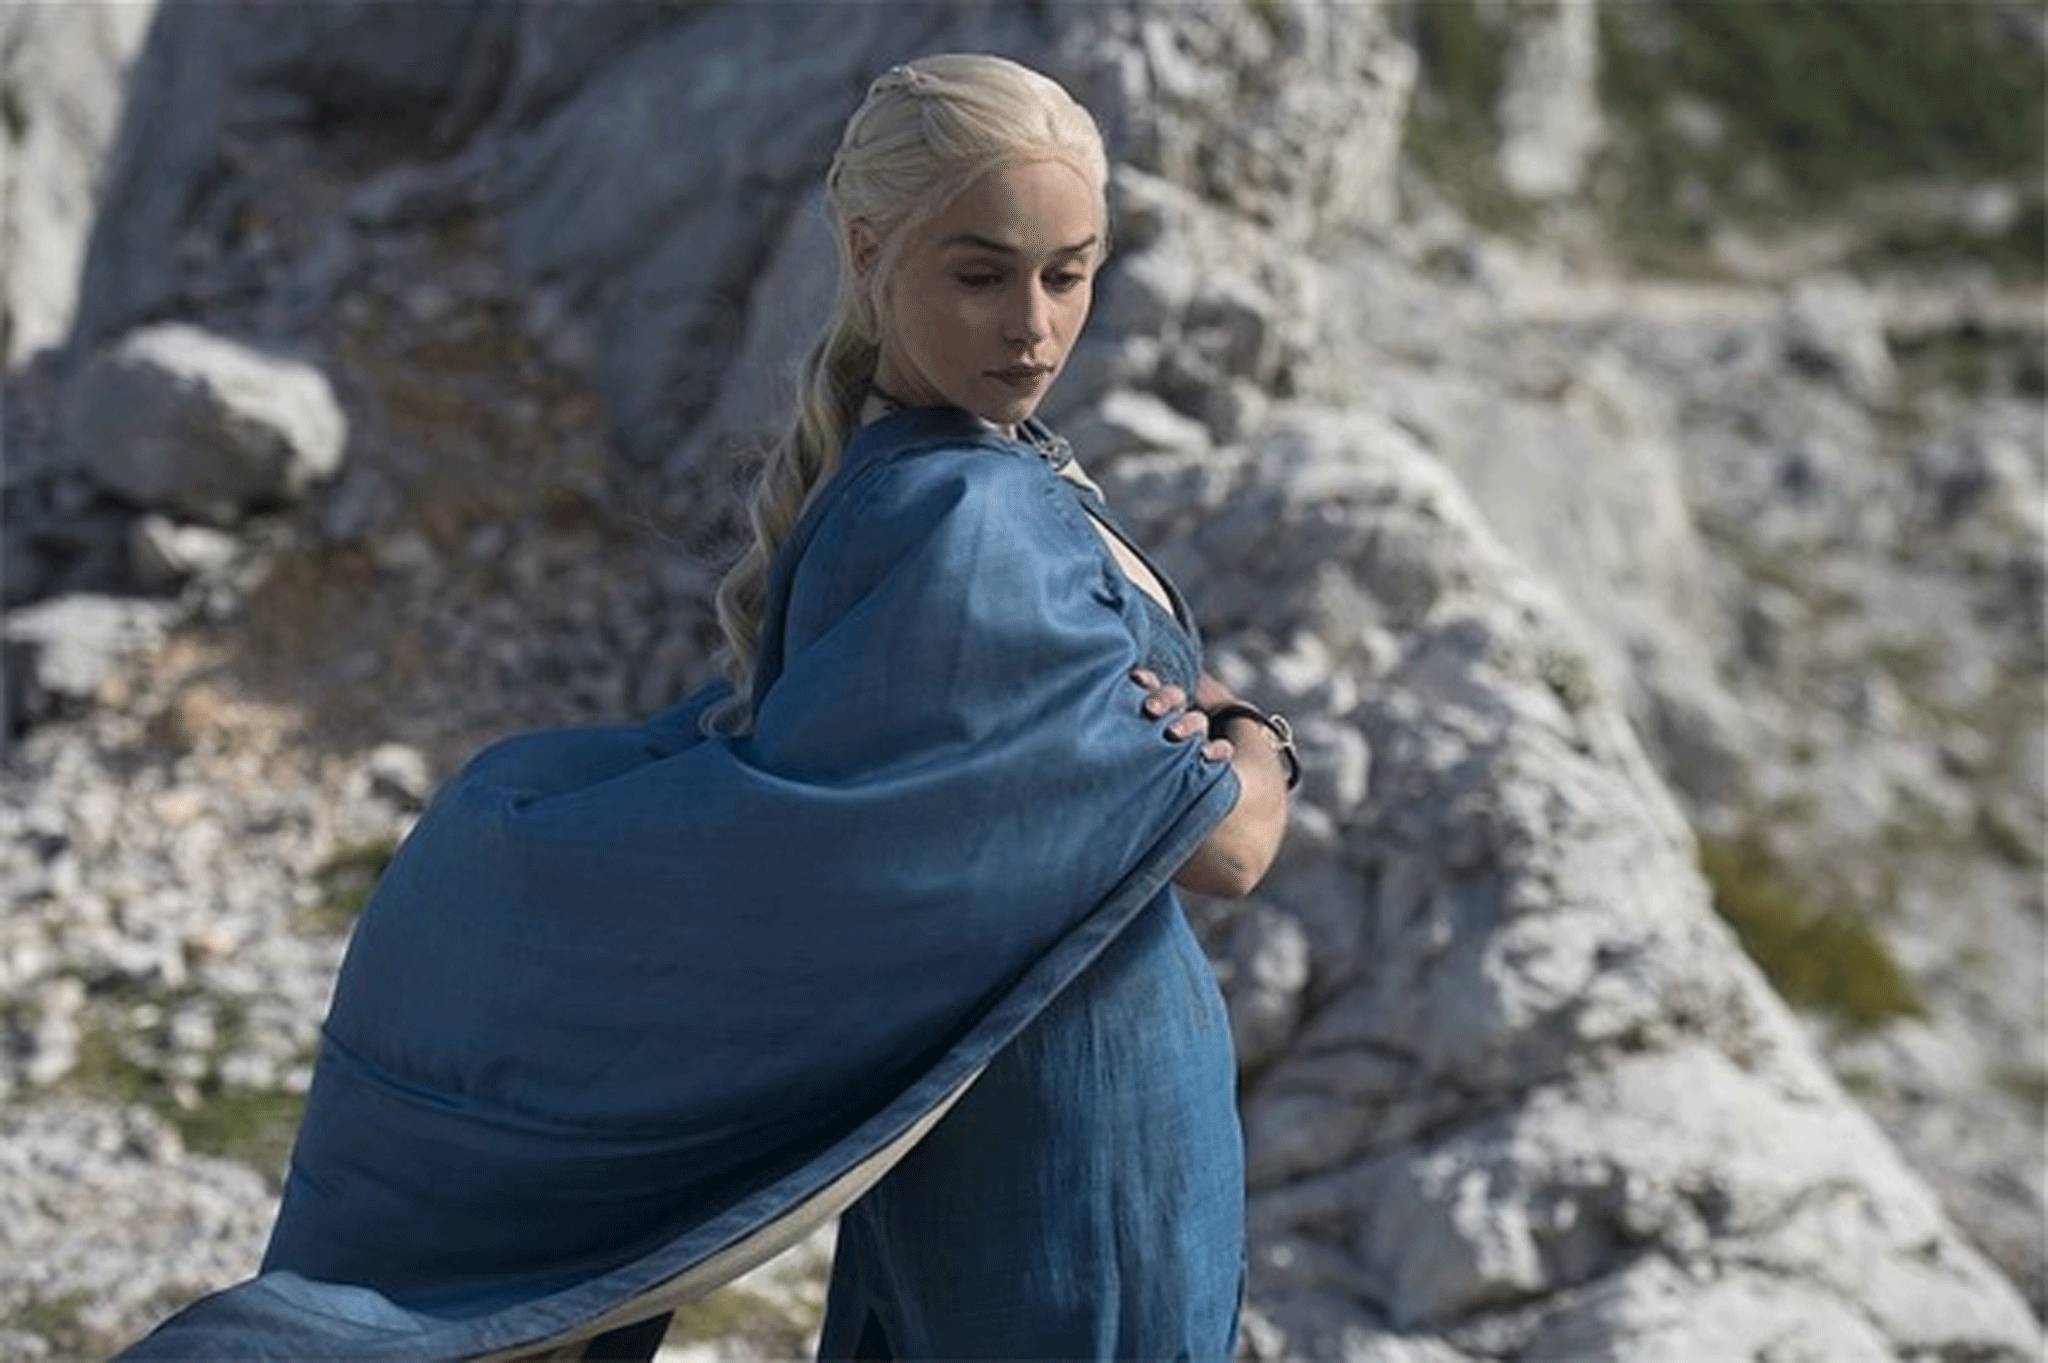 Daenerys Targaryen, played by Emilia Clarke, faces new problems